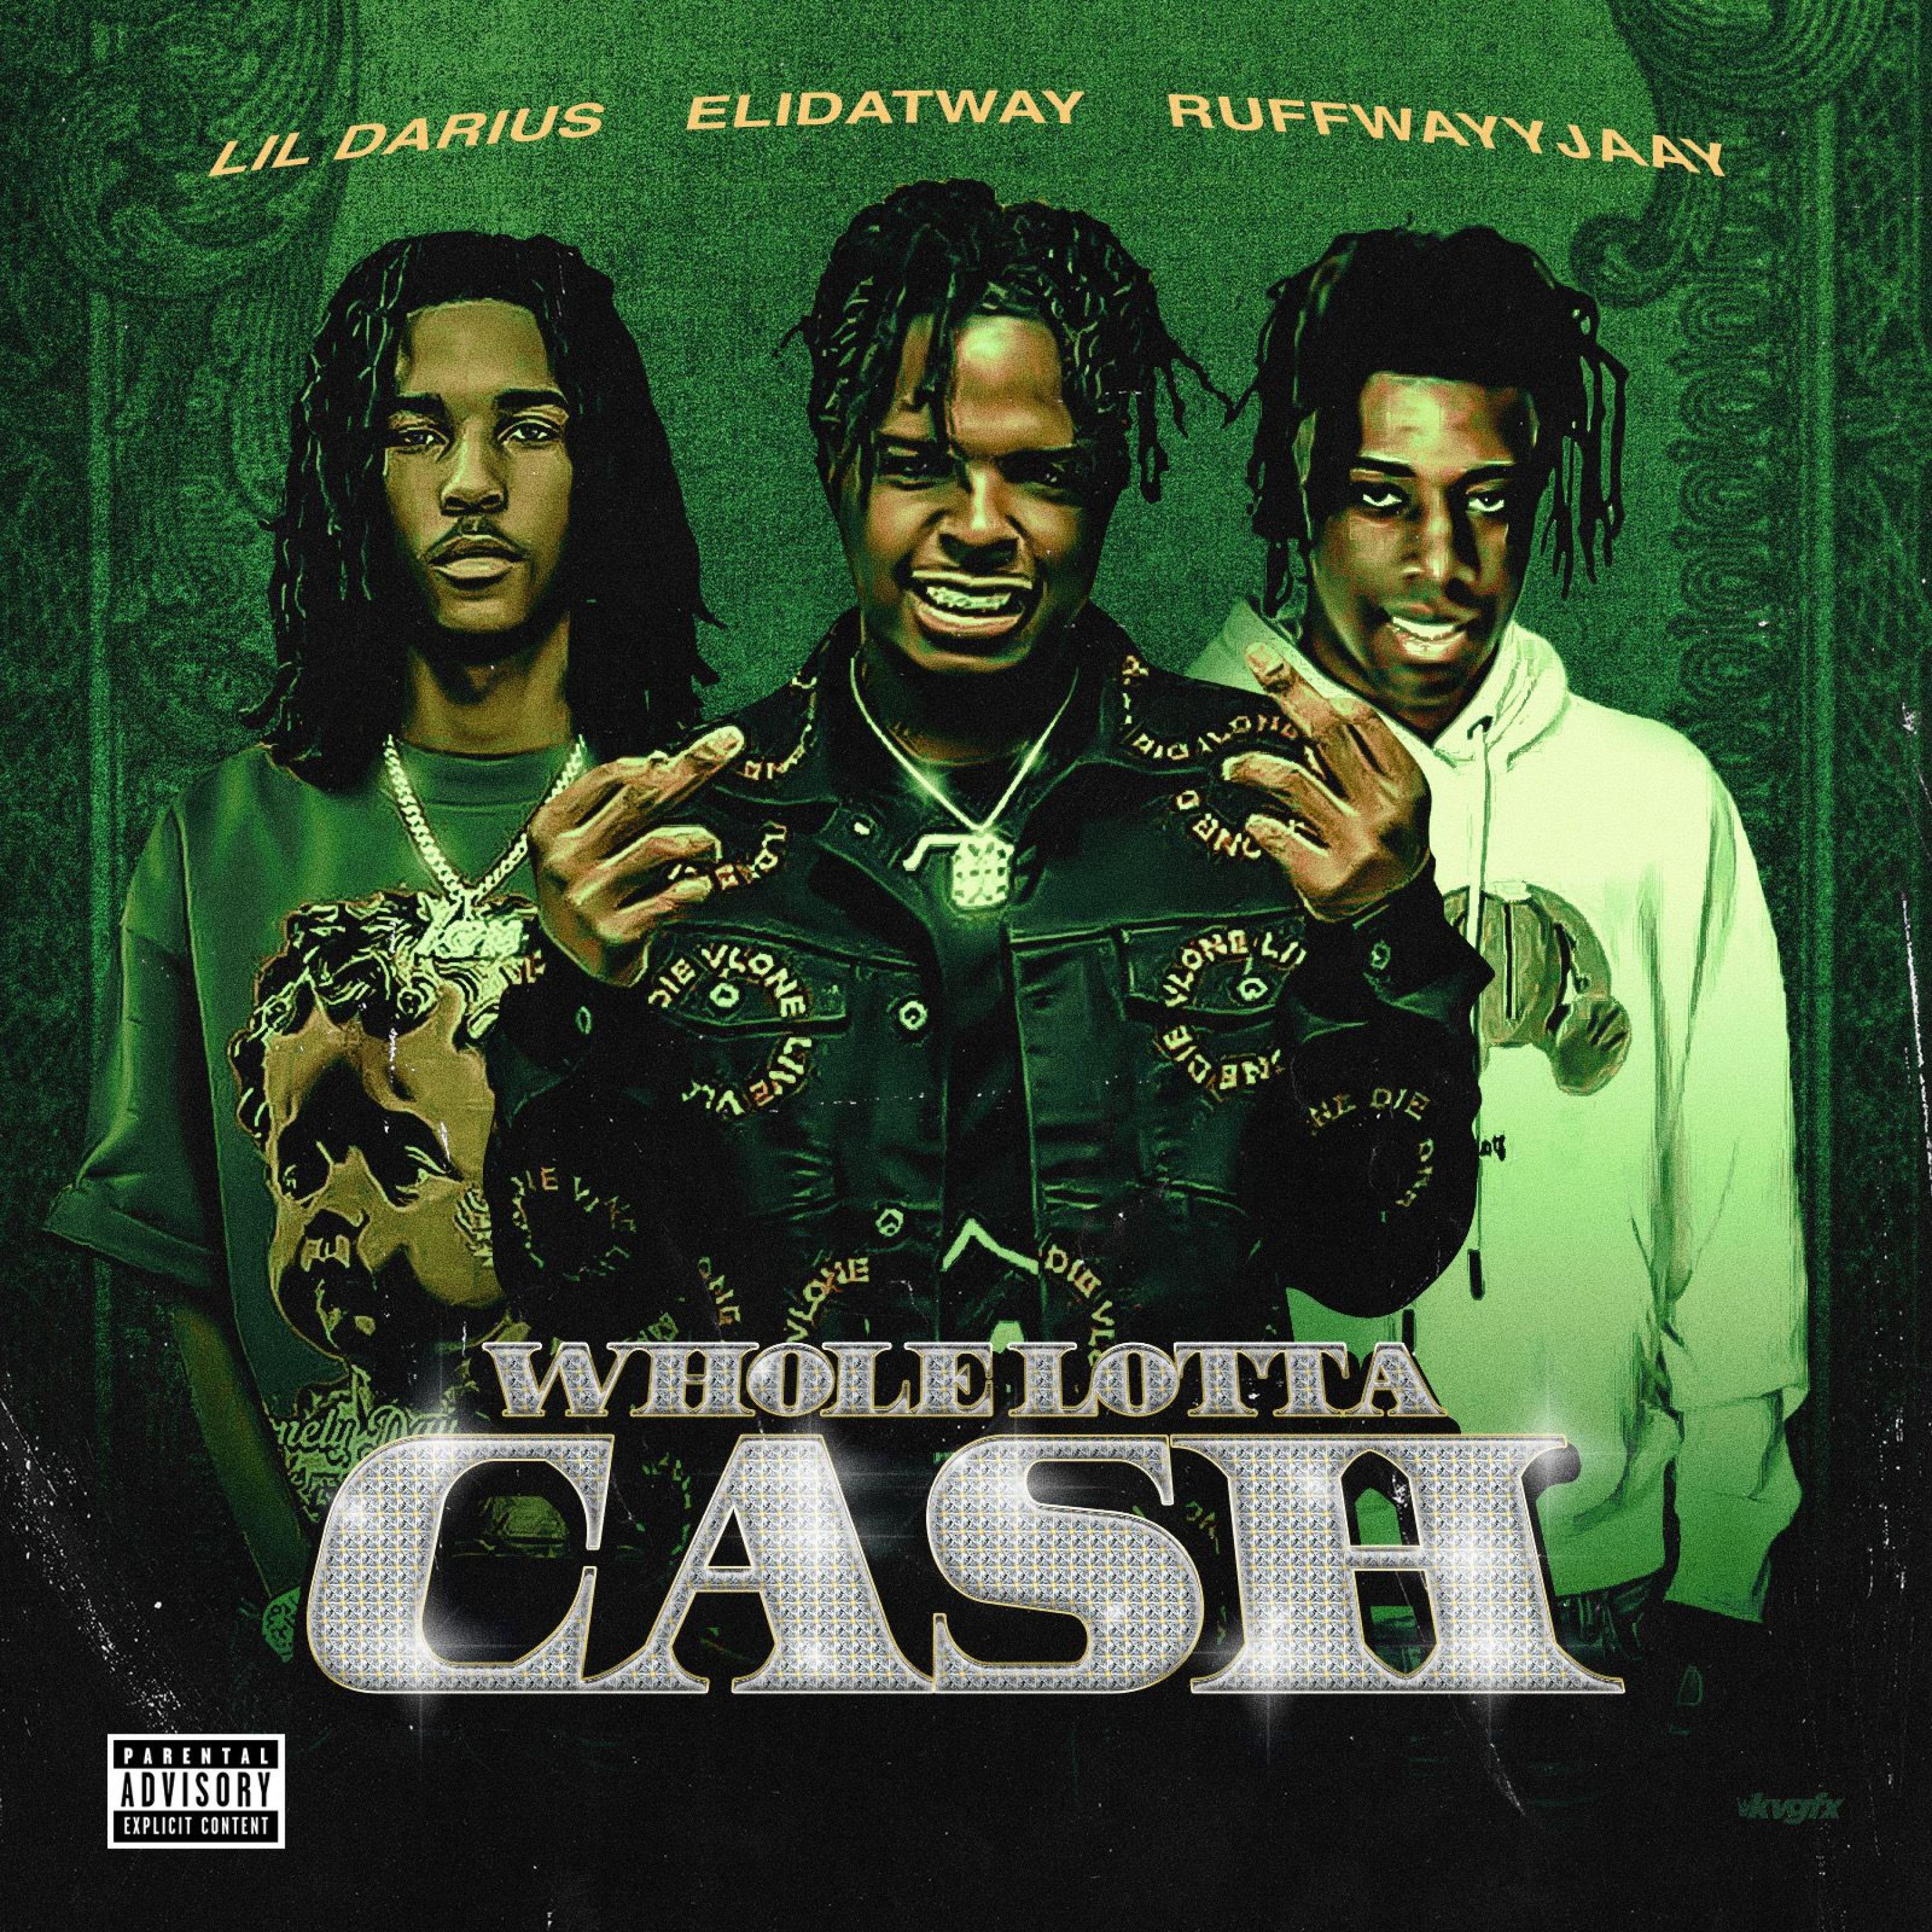 Elidatway - Whole lotta cash (feat. Ruffwayyjaay & Lil darius)